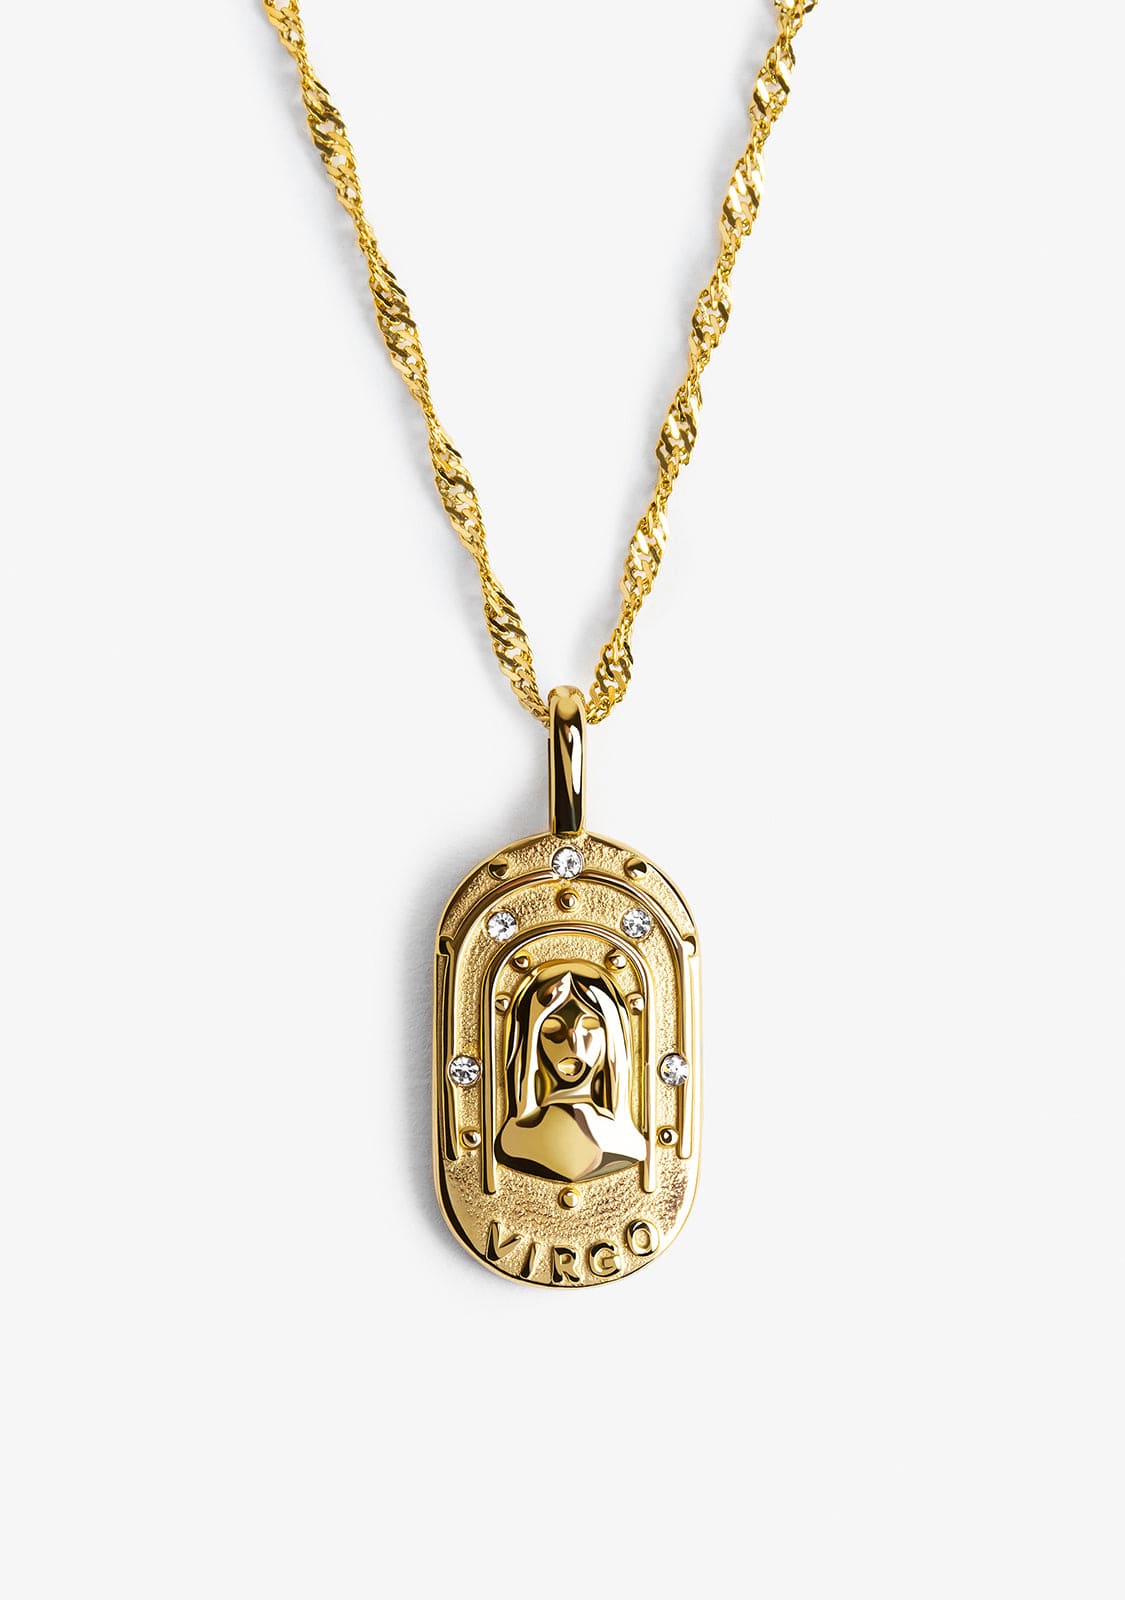 Virgo Zodiac Necklace Steel Gold